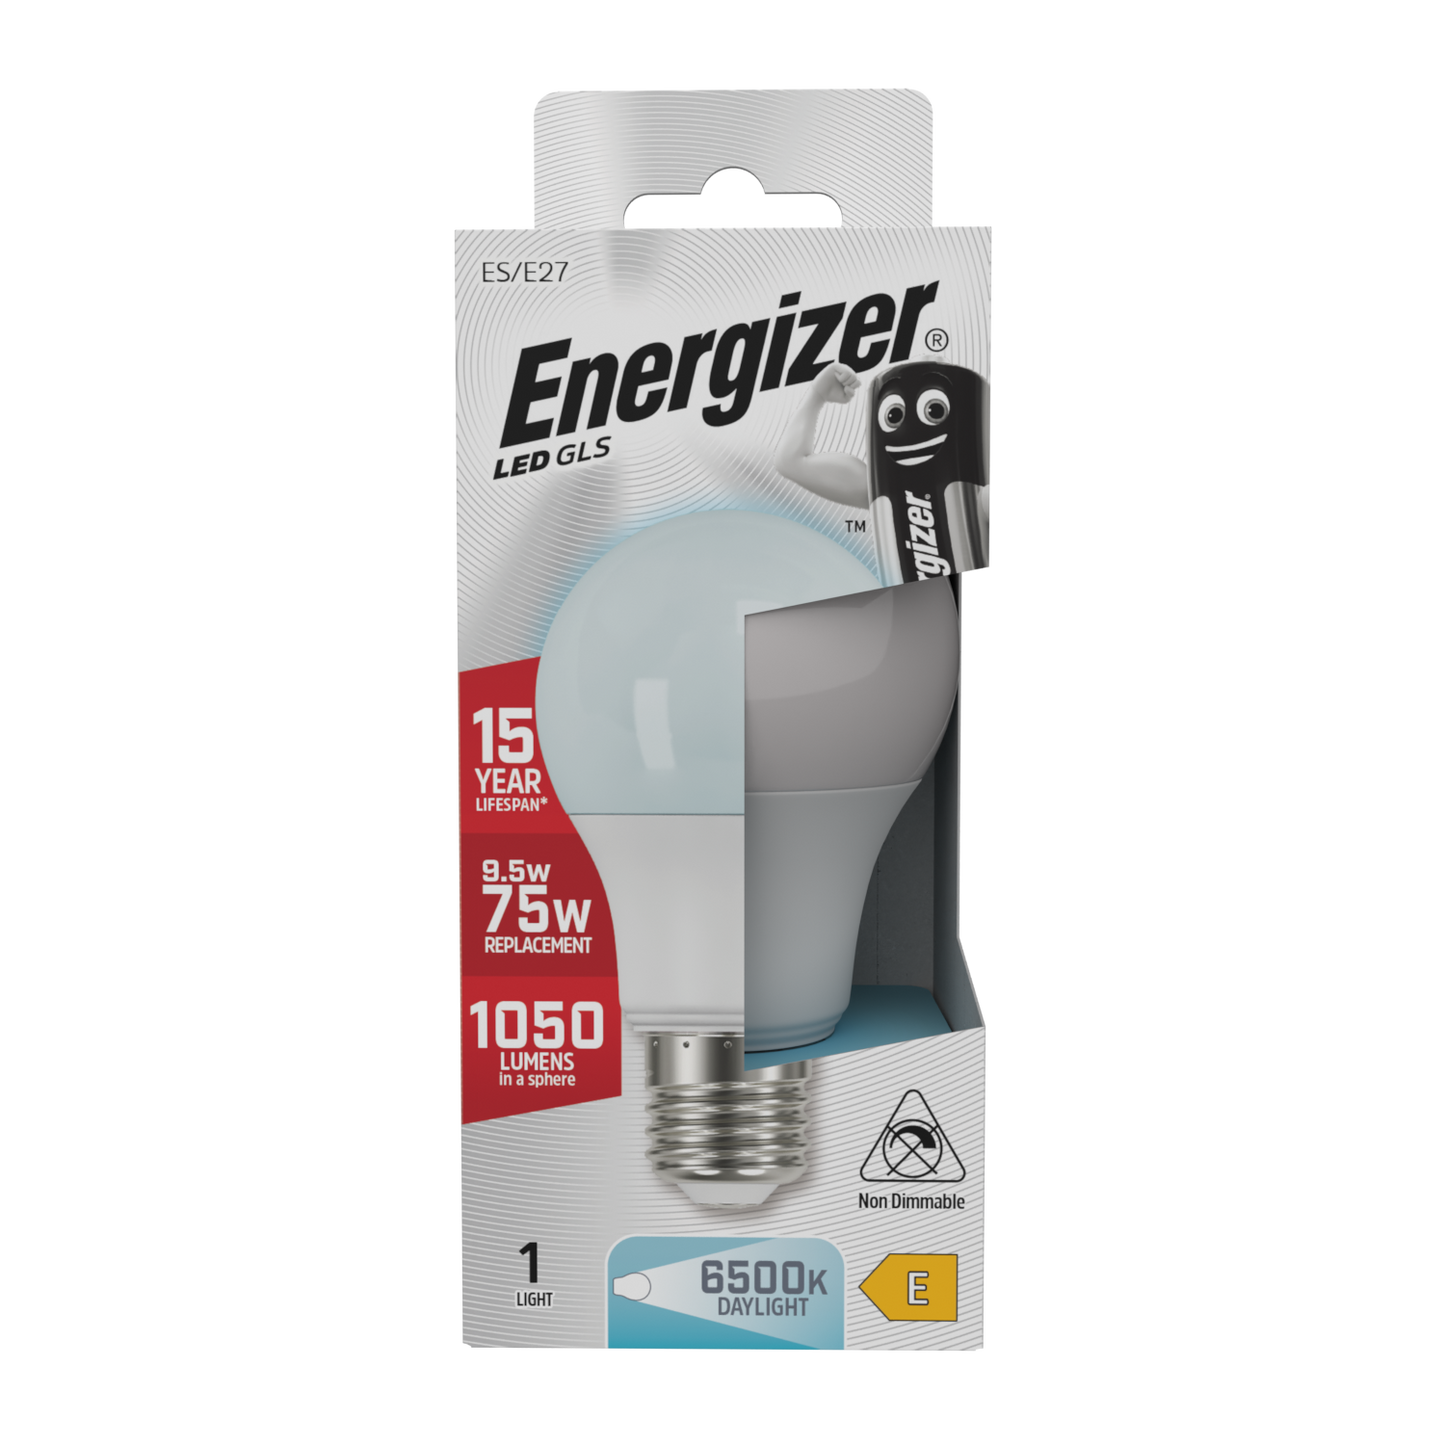 Energizer LED GLS E27 (ES) 1,050lm 9.5W 6,500K (Daylight), Box of 1